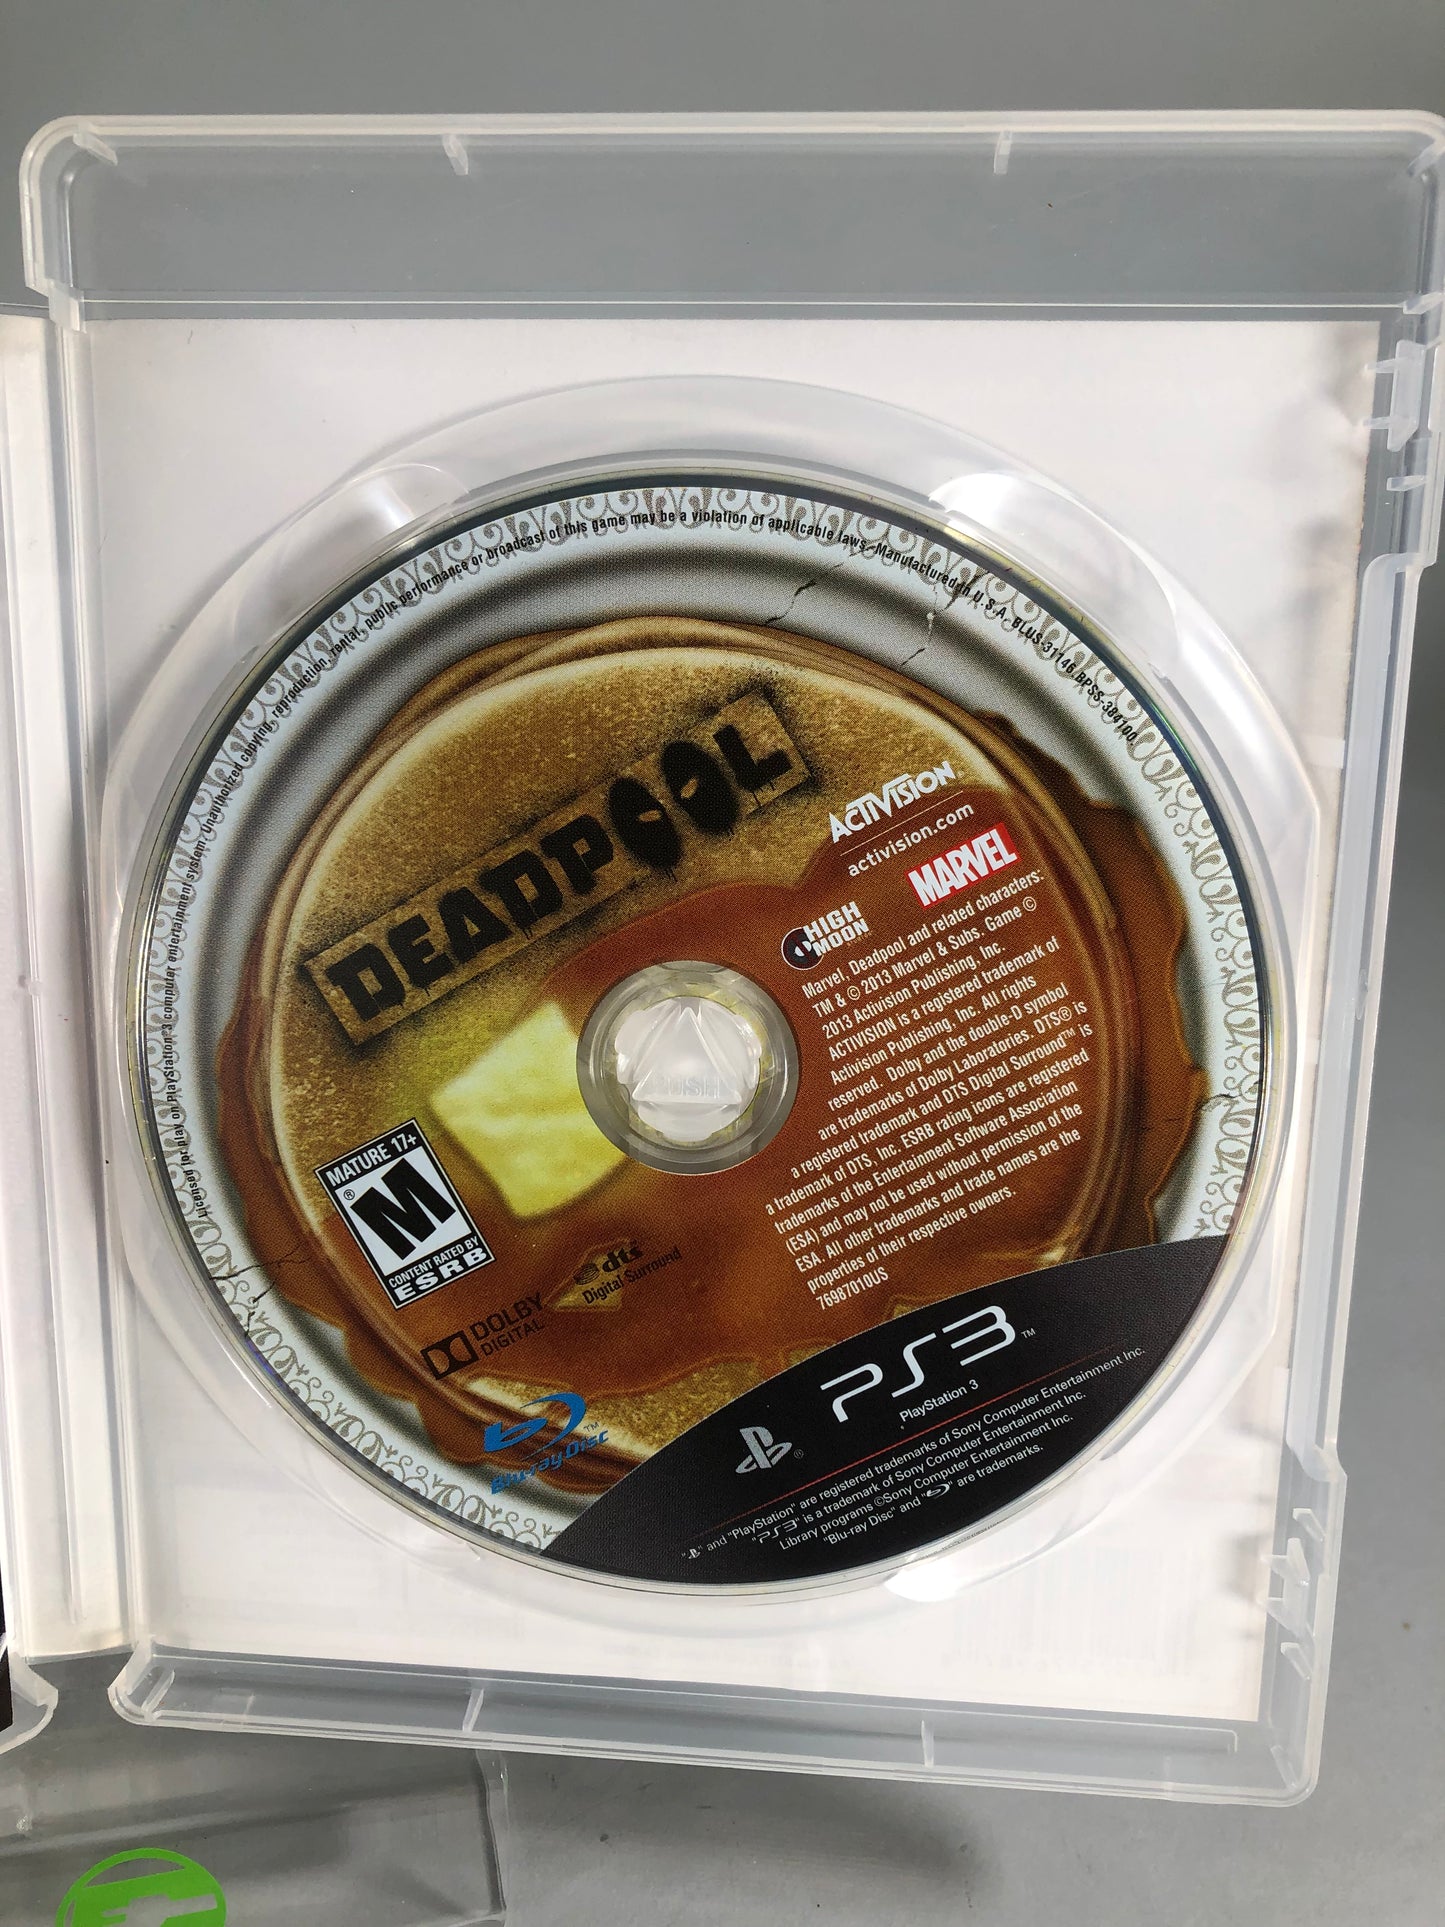 Deadpool (Sony PlayStation 3 PS3, 2013) CIB